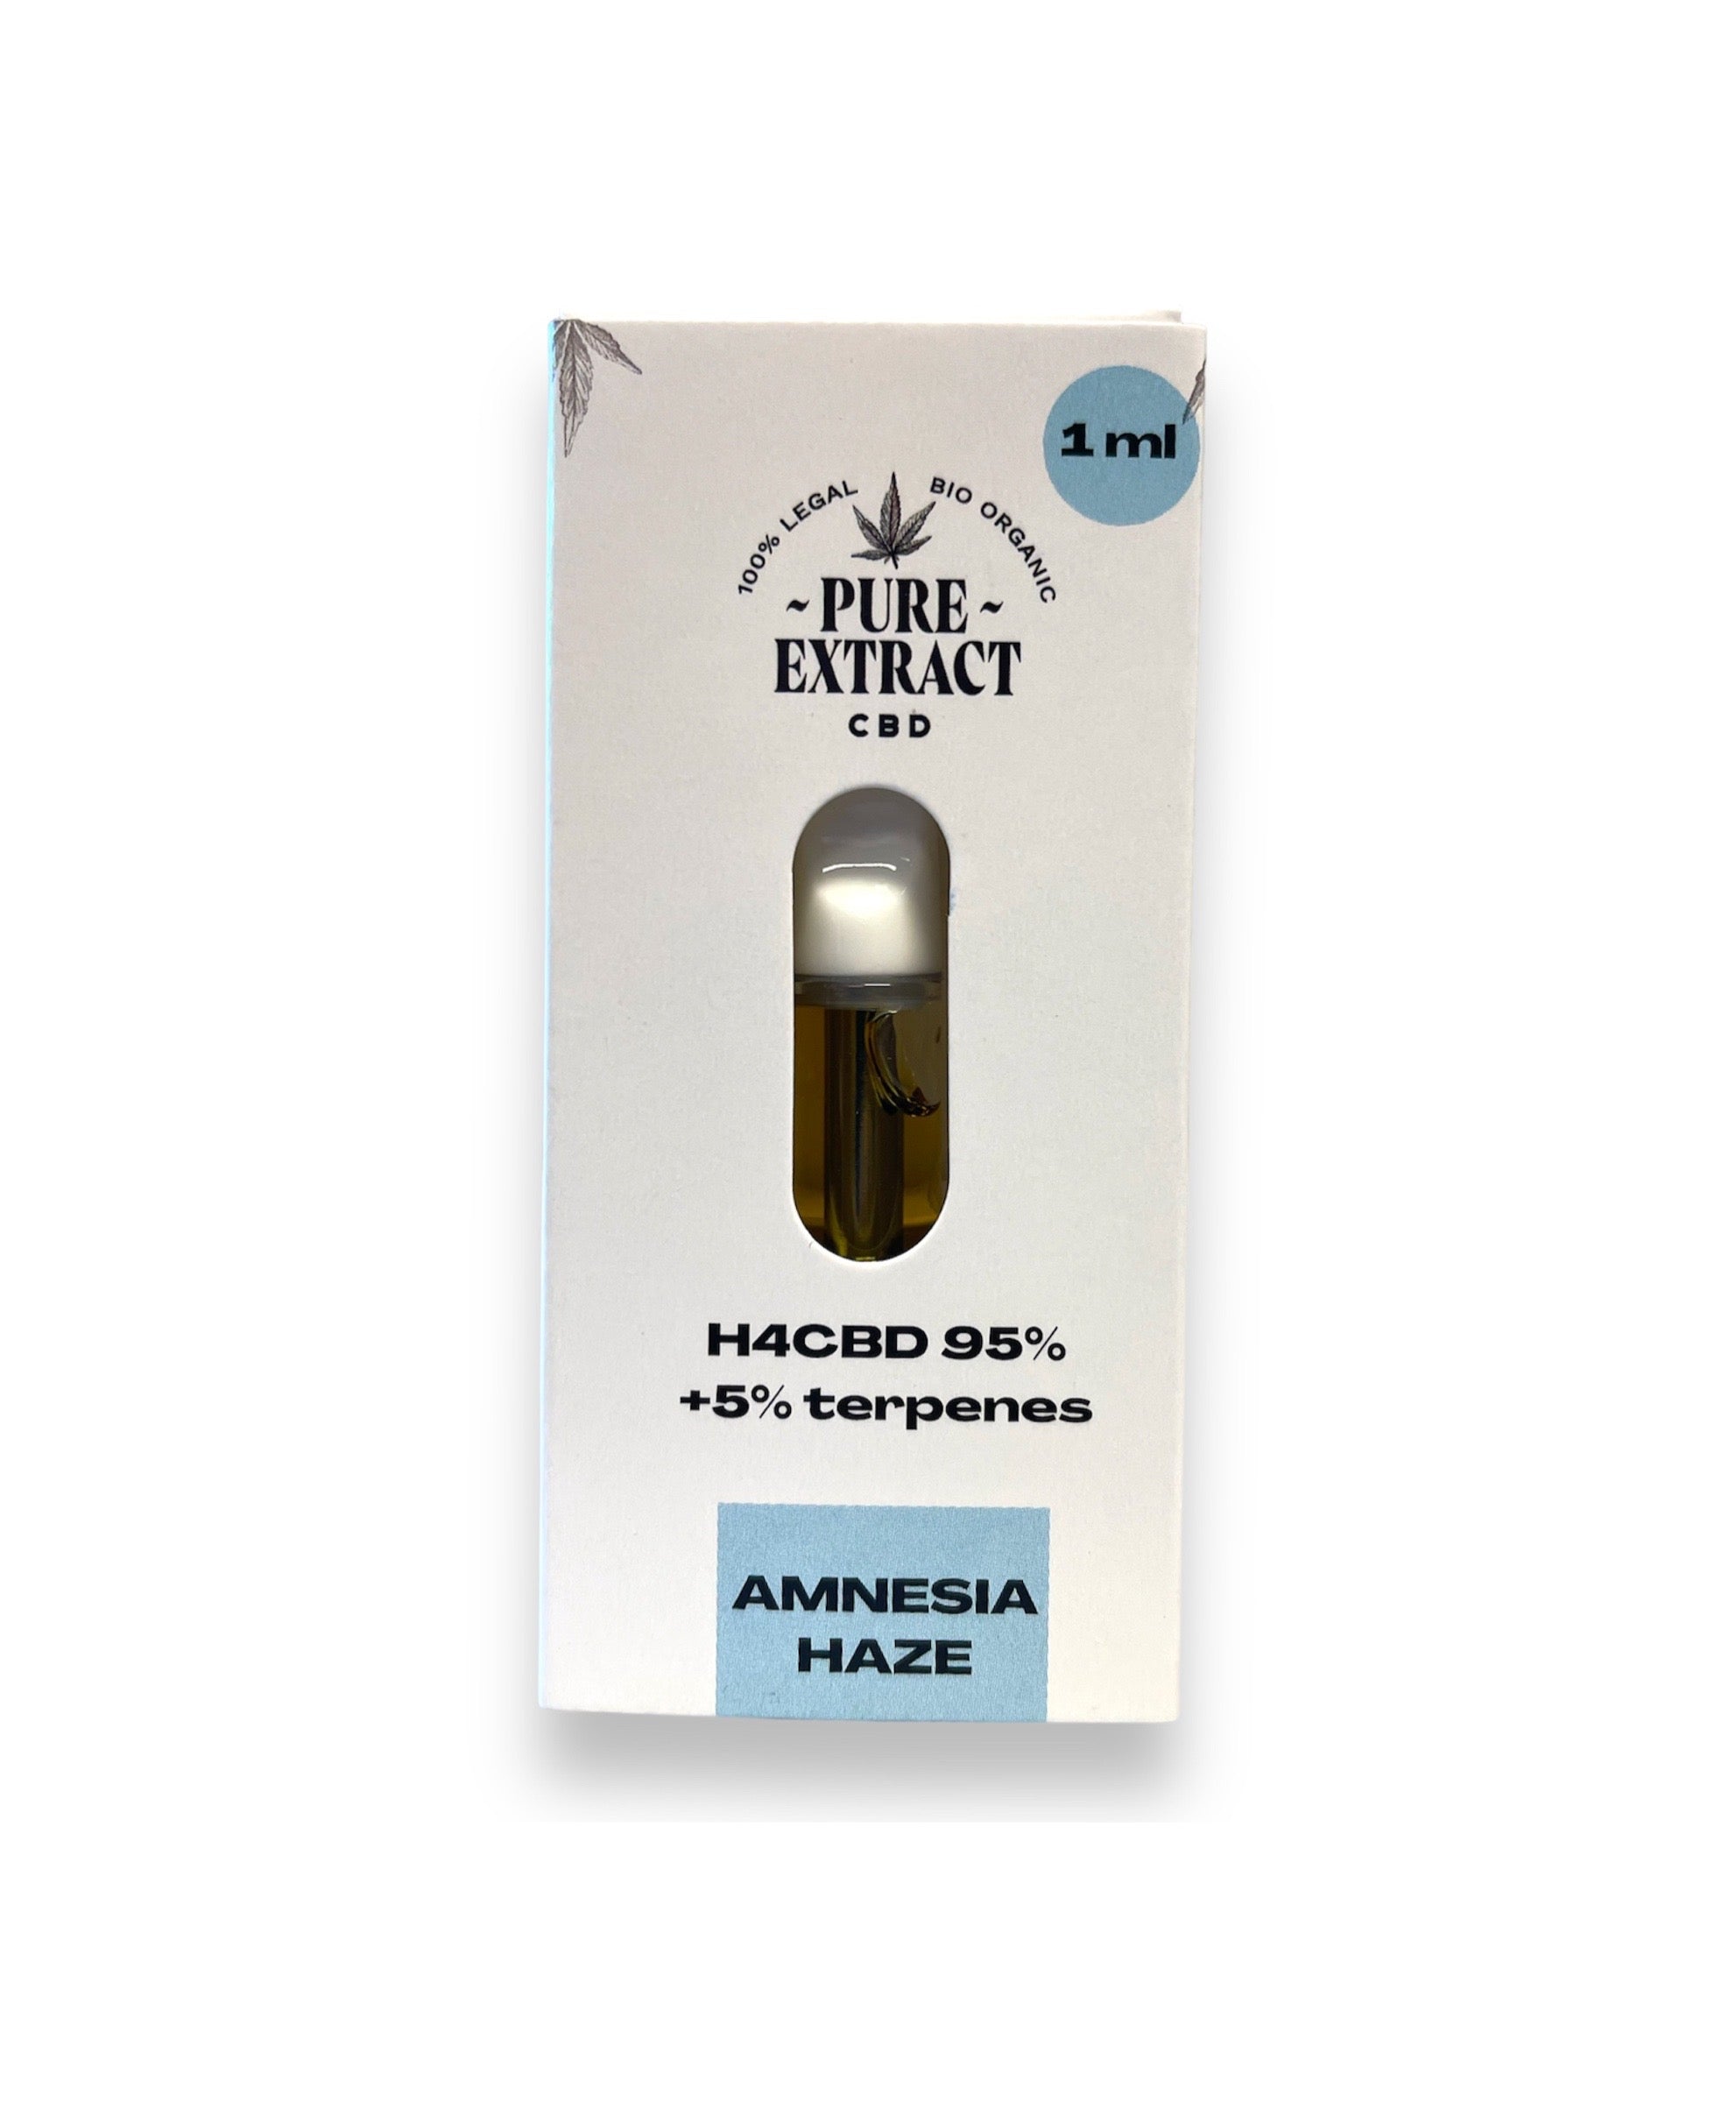 Pure Extract CBD Cartridge (Dab Pen) by H4CBD - Amnesia - 95% H4CBD - 1ML - 600 puffs